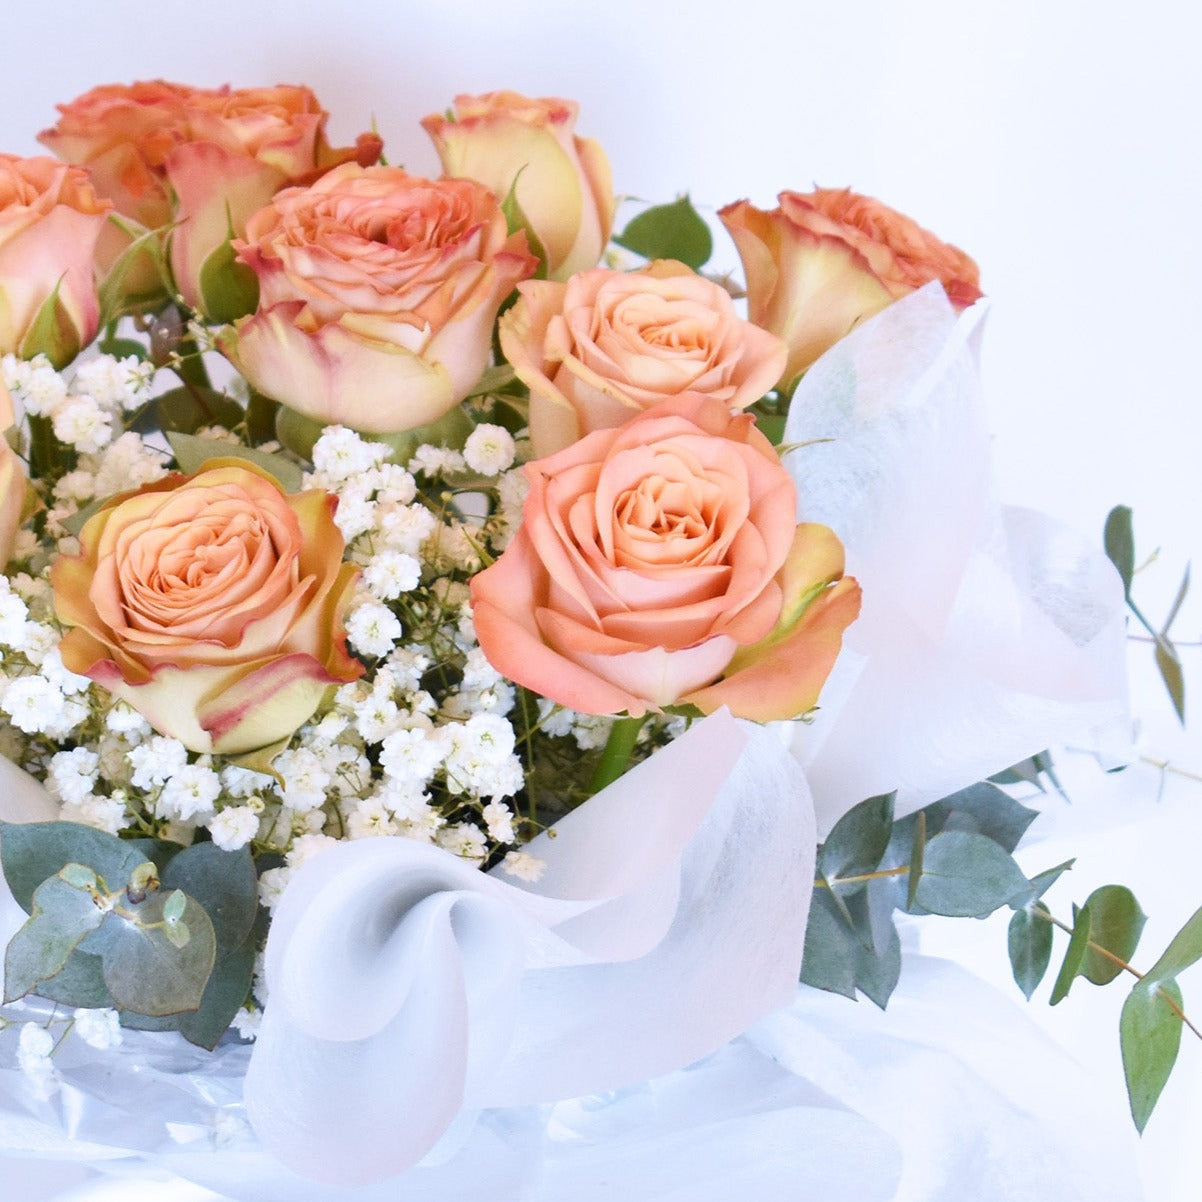 Valentine's Day Flowers - Toffee Rose Hatbox